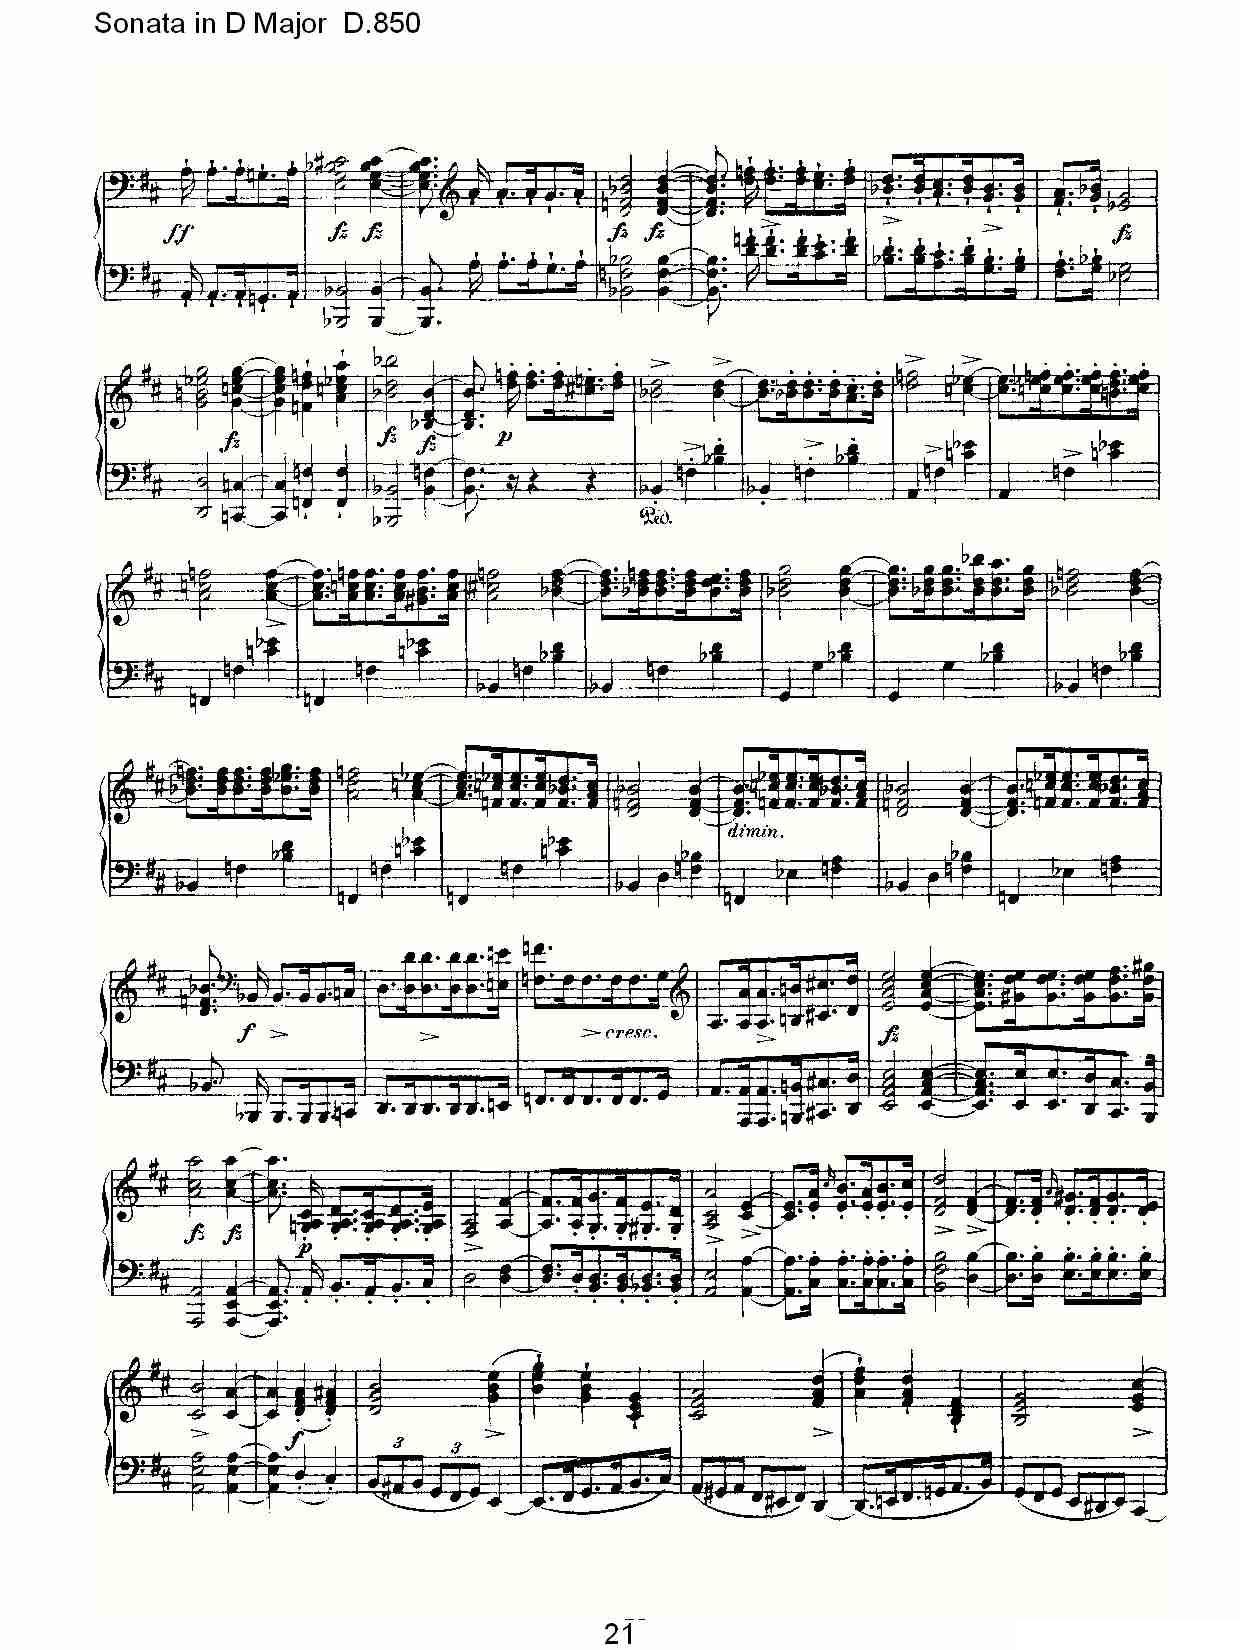 Sonata in D Major D.850（D大调奏鸣曲 D.850）钢琴曲谱（图21）